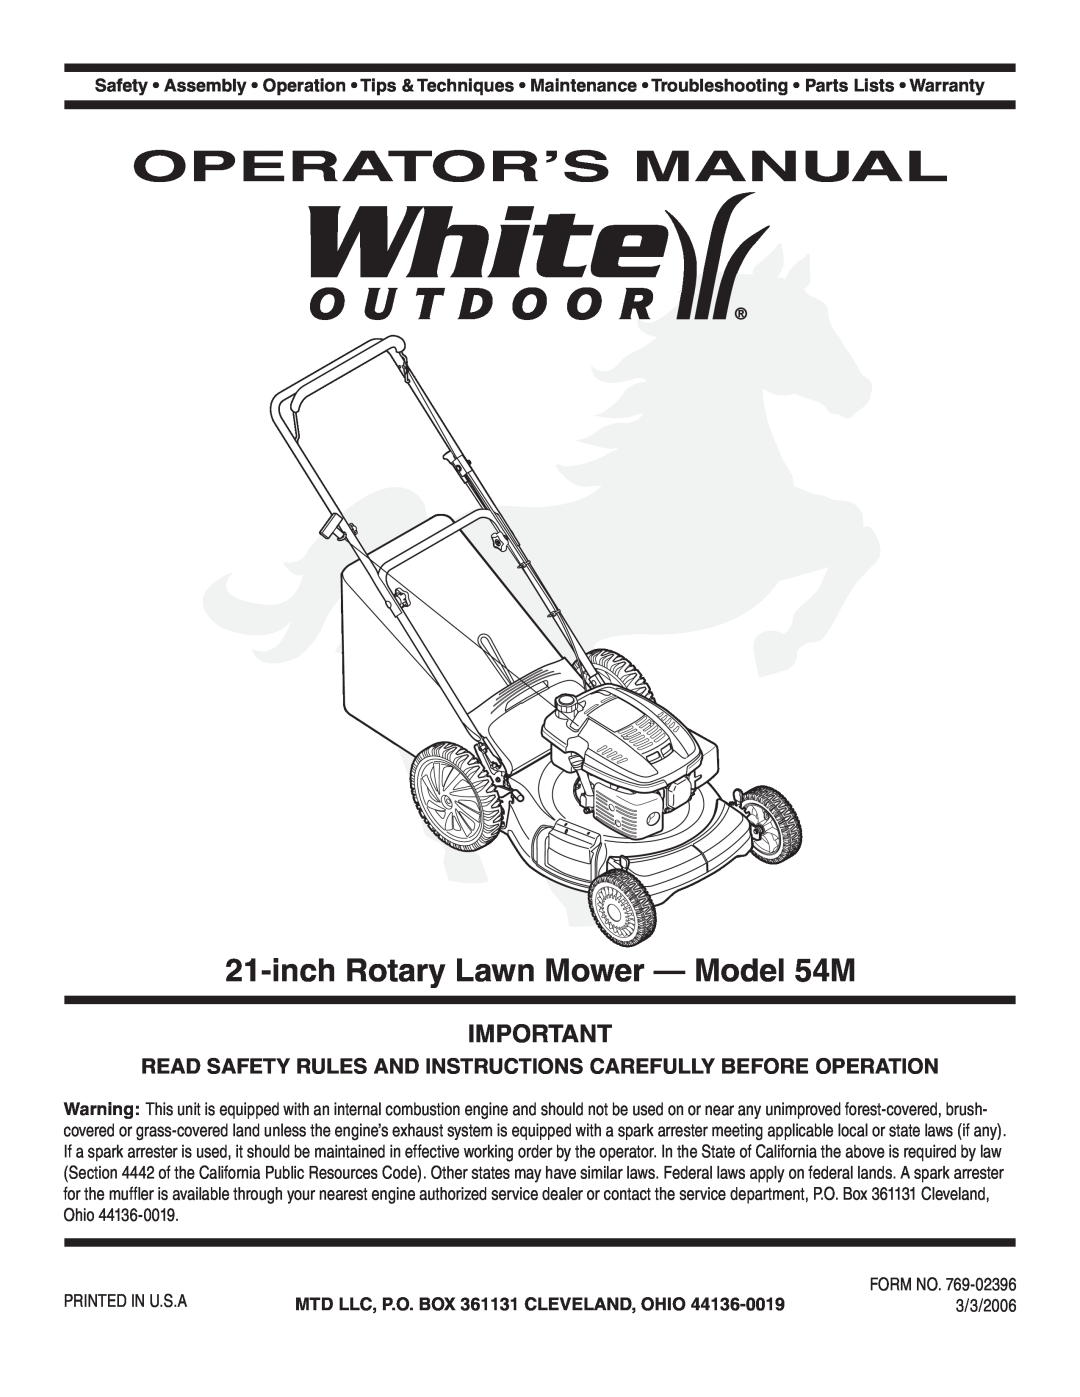 MTD warranty Operator’S Manual, inch Rotary Lawn Mower - Model 54M, MTD LLC, P.O. BOX 361131 CLEVELAND, OHIO 